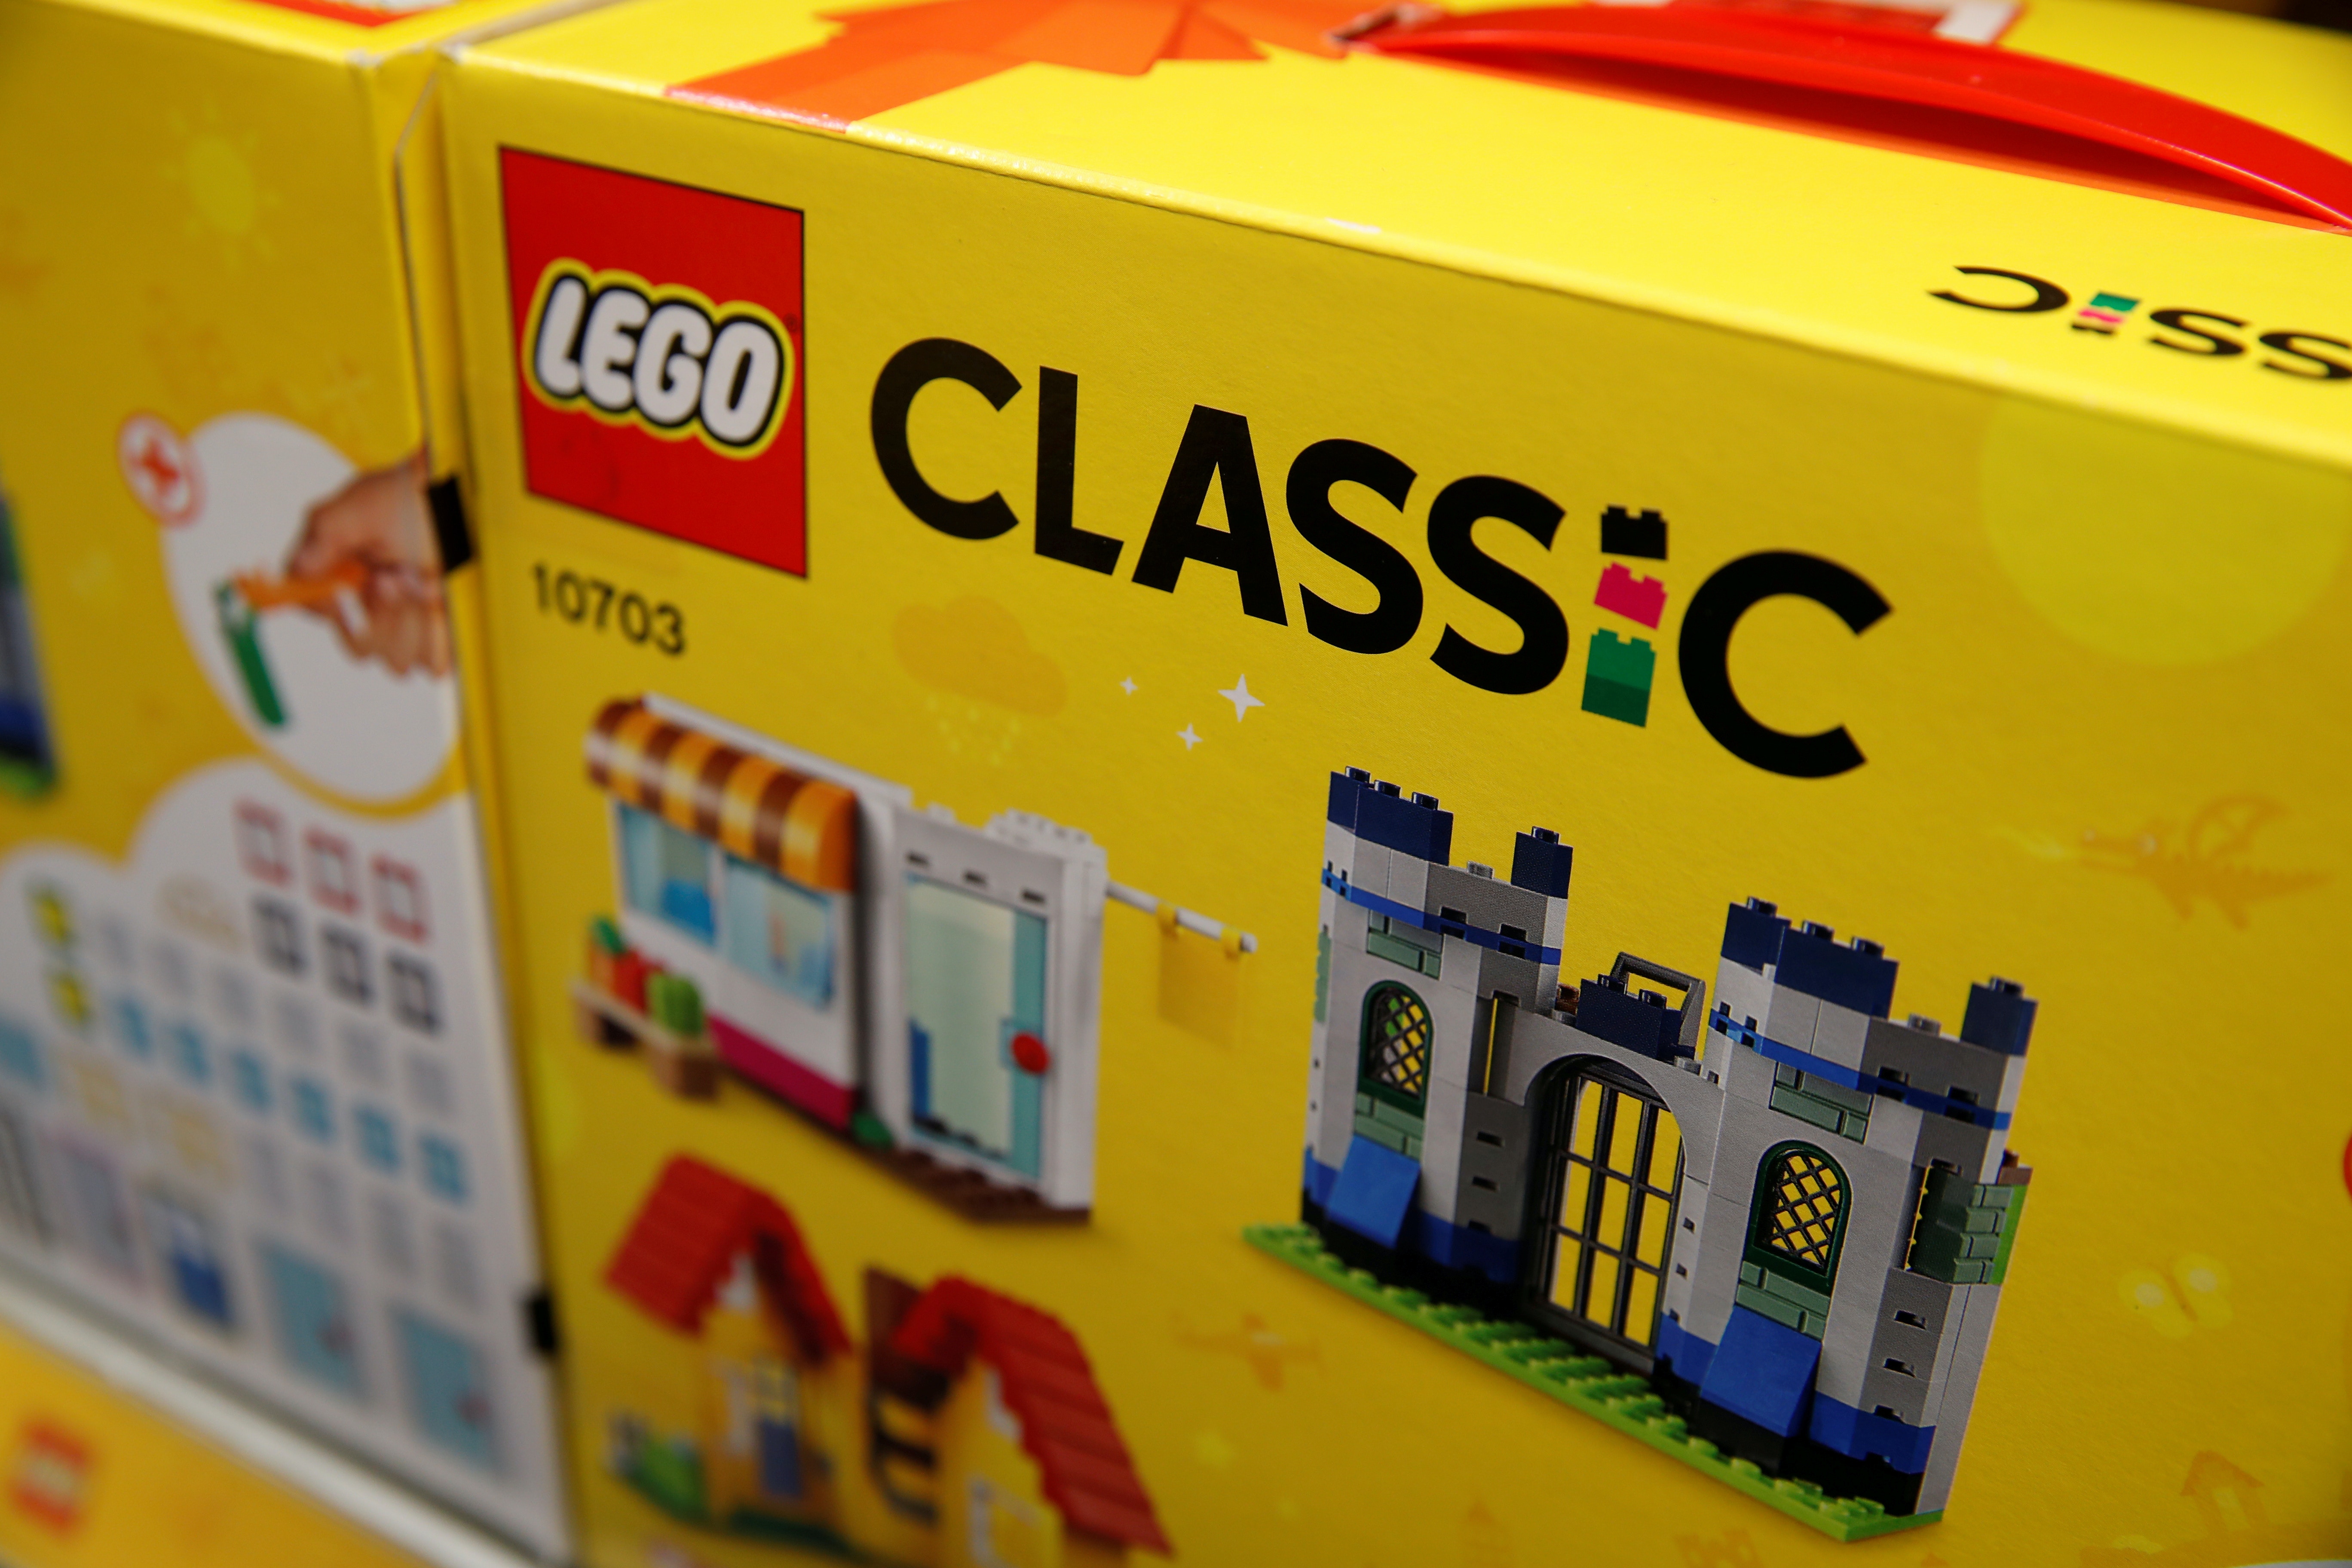 Lego減少企業碳排放量明年起淘汰塑膠袋包裝全因收他們來信 香港01 世界說